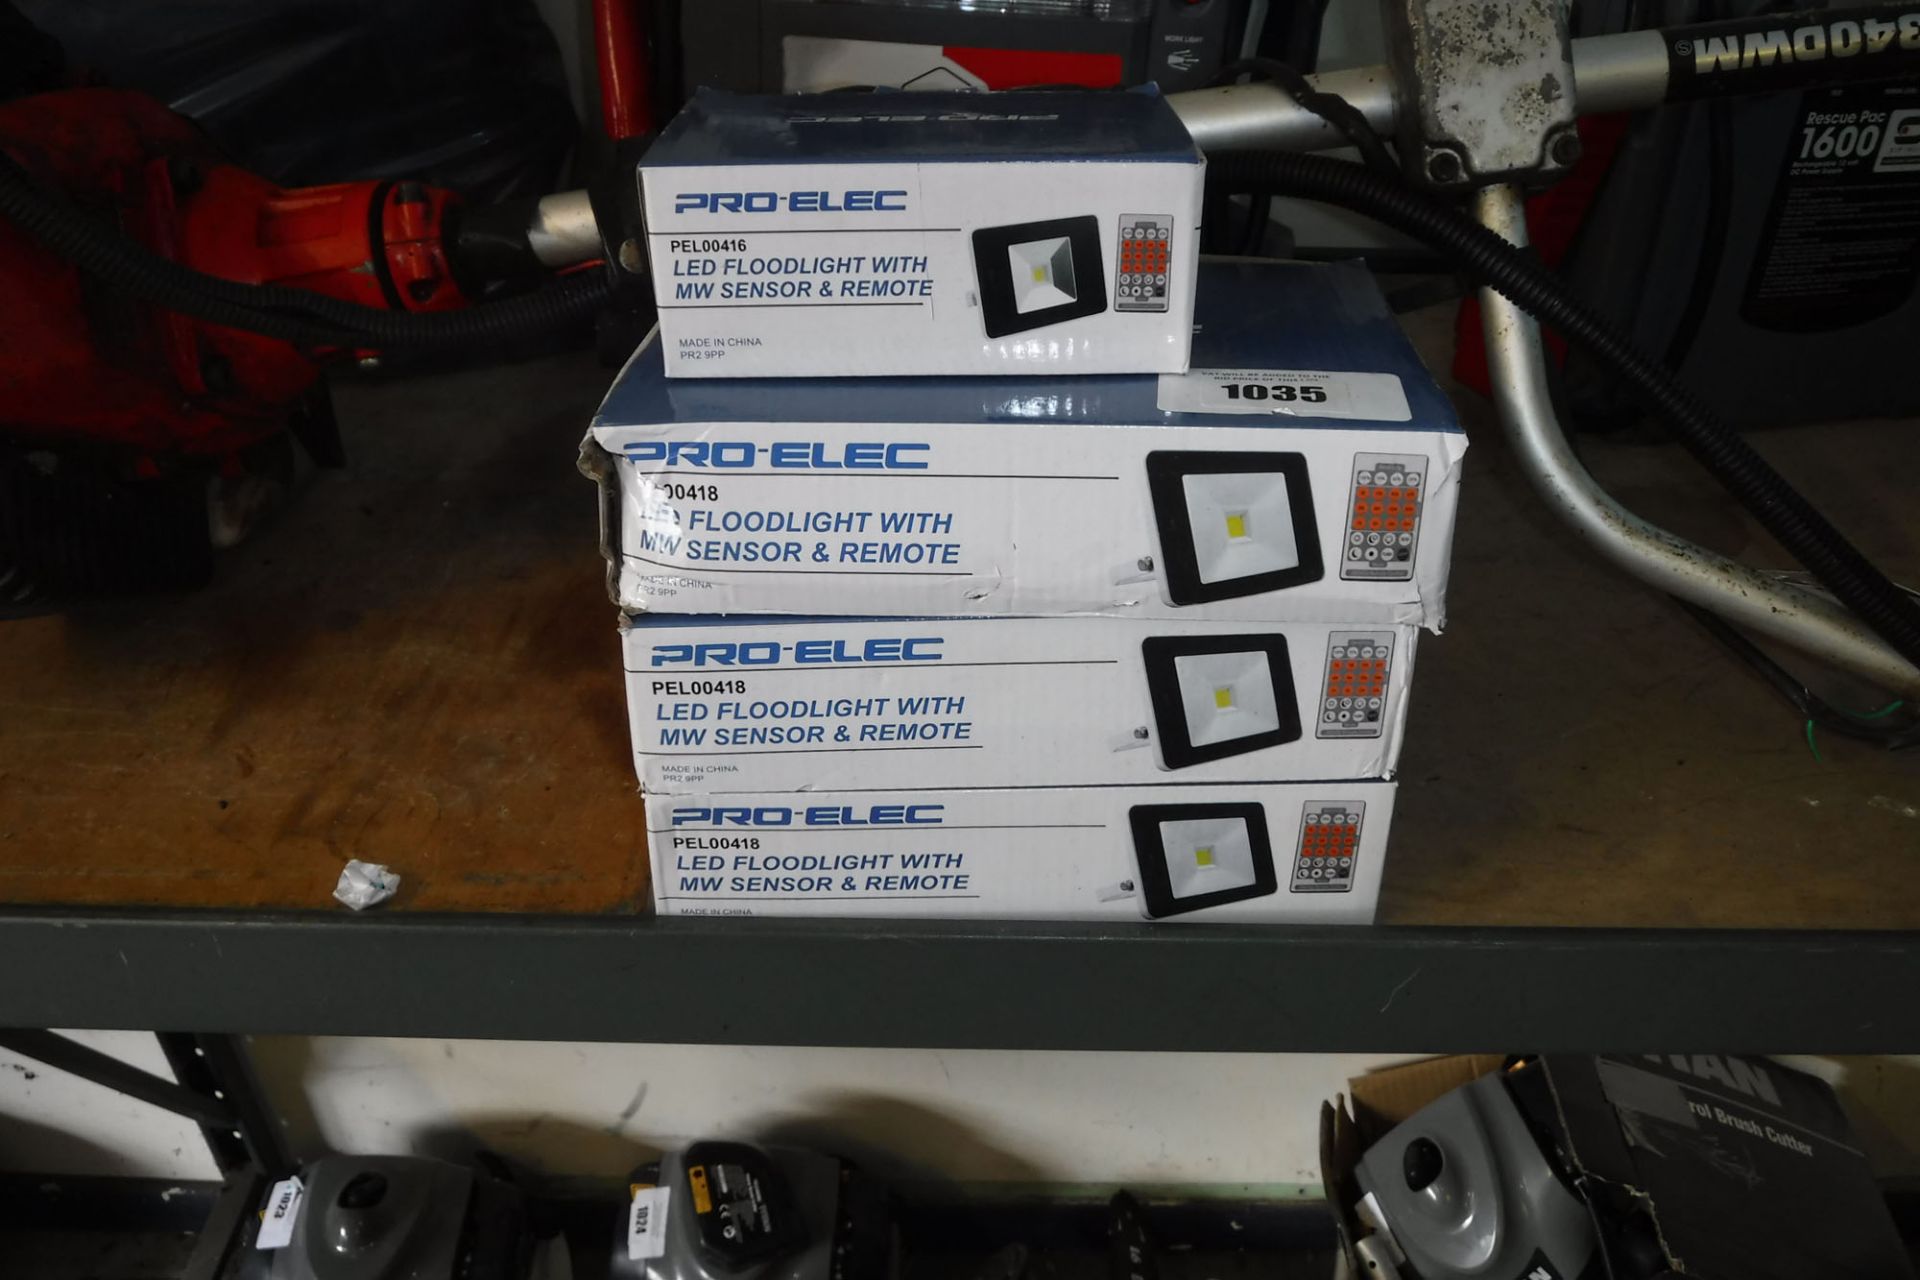 4 boxed Pro Elec LED flood lights